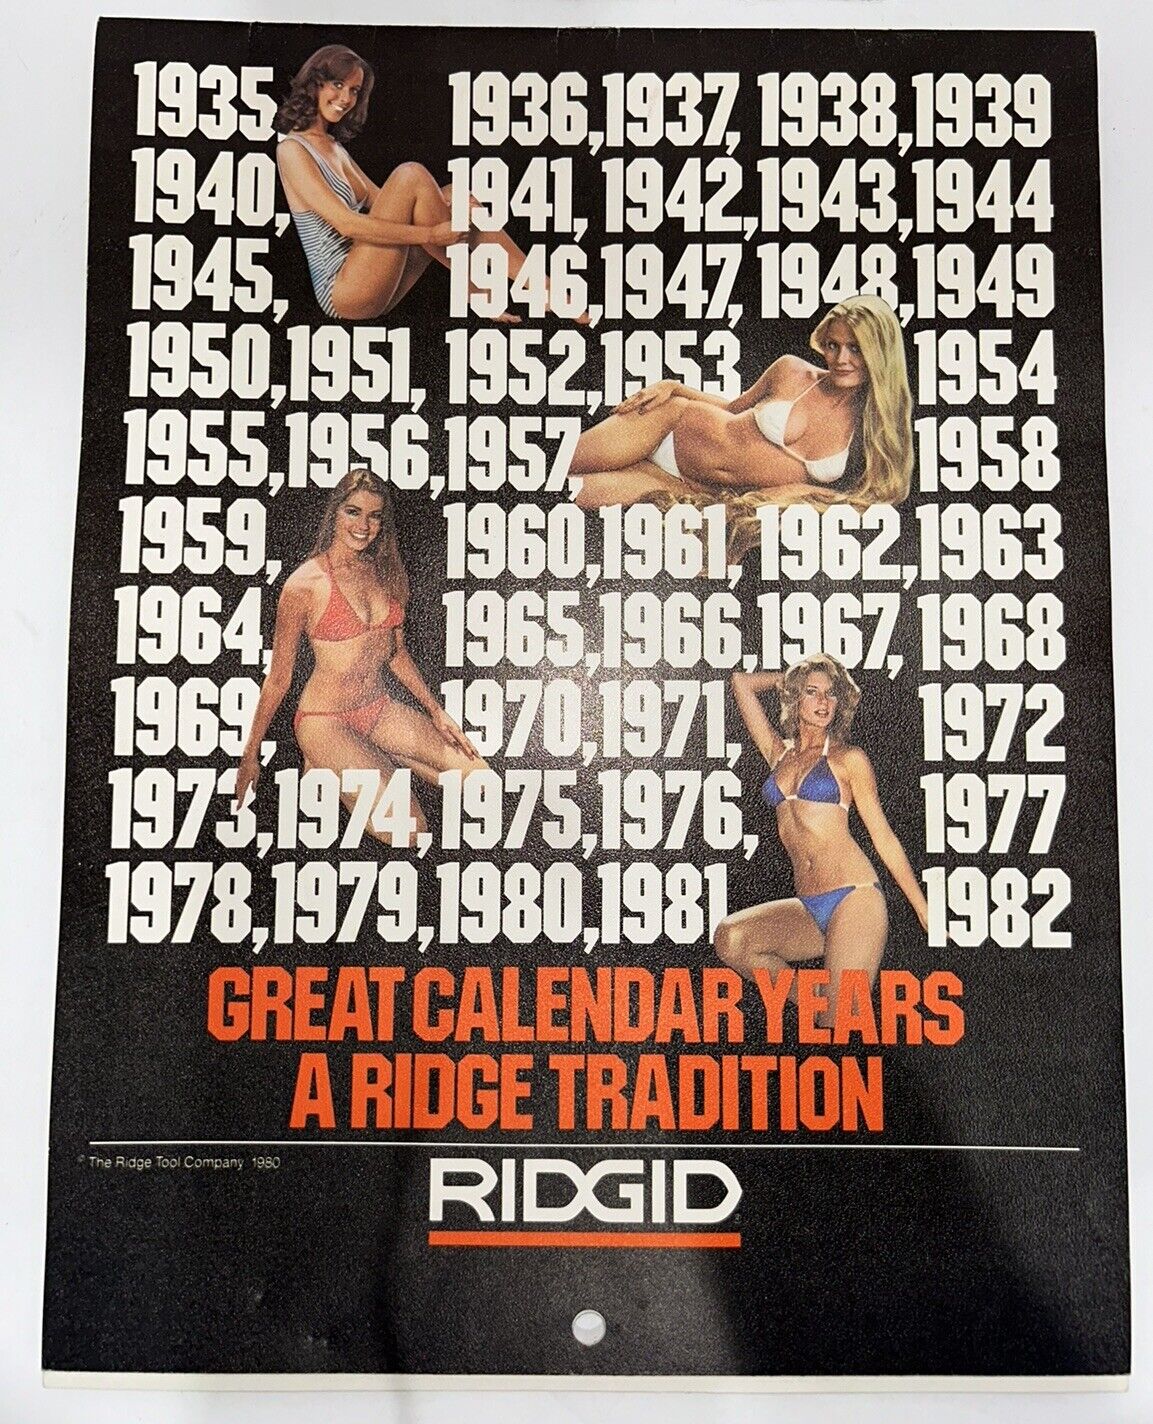 Vintage Ridgid Tools Pin Up Calendar 1981-1982 Ridge Tool Company Swimsuit Girls